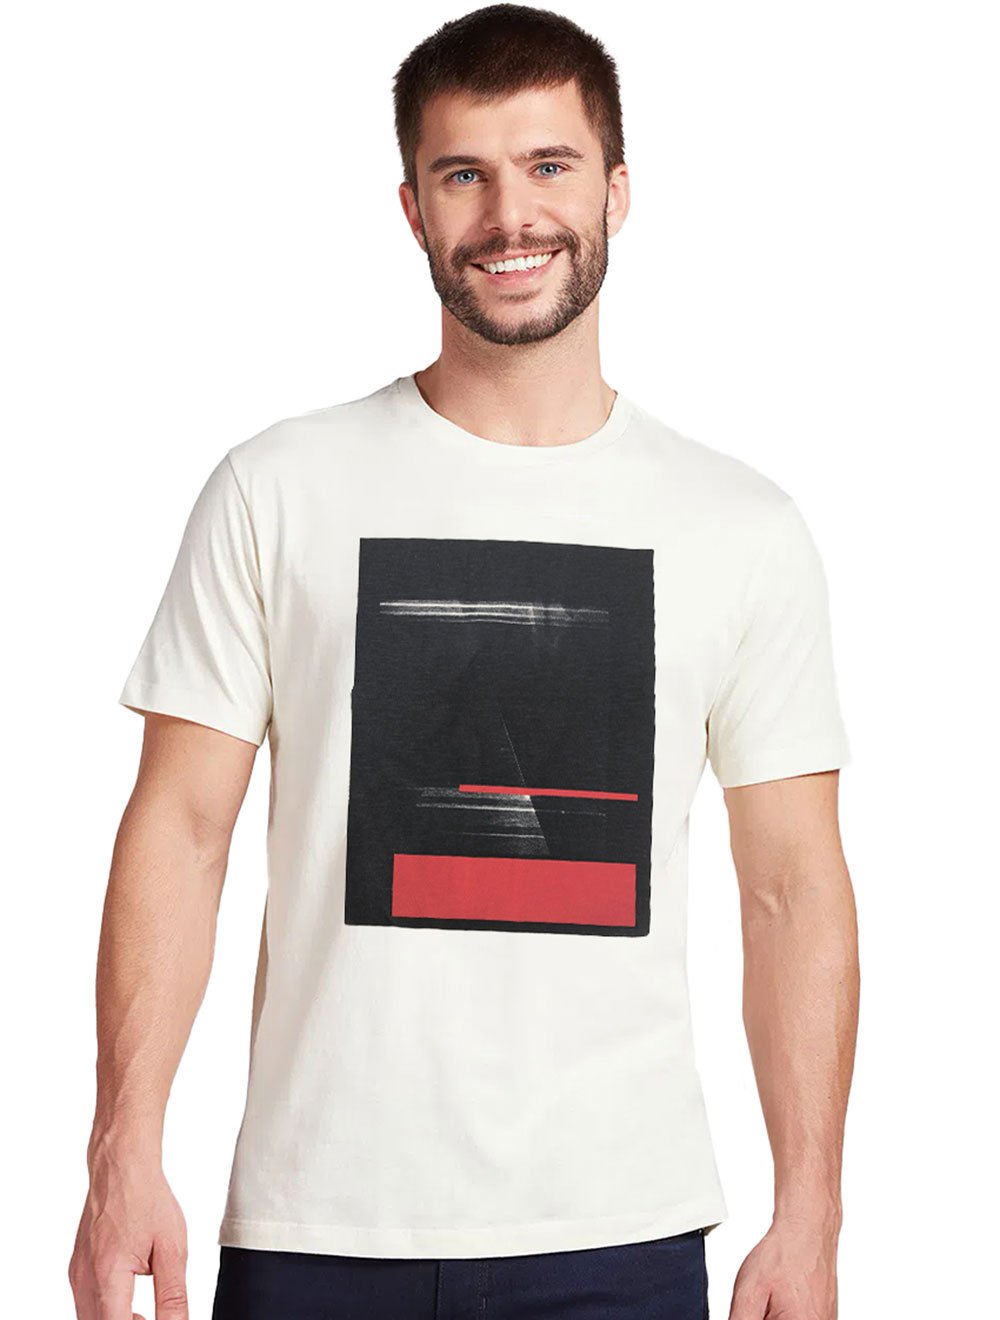 Camiseta Aramis Masculina Flamê Shadow Stamp Branca